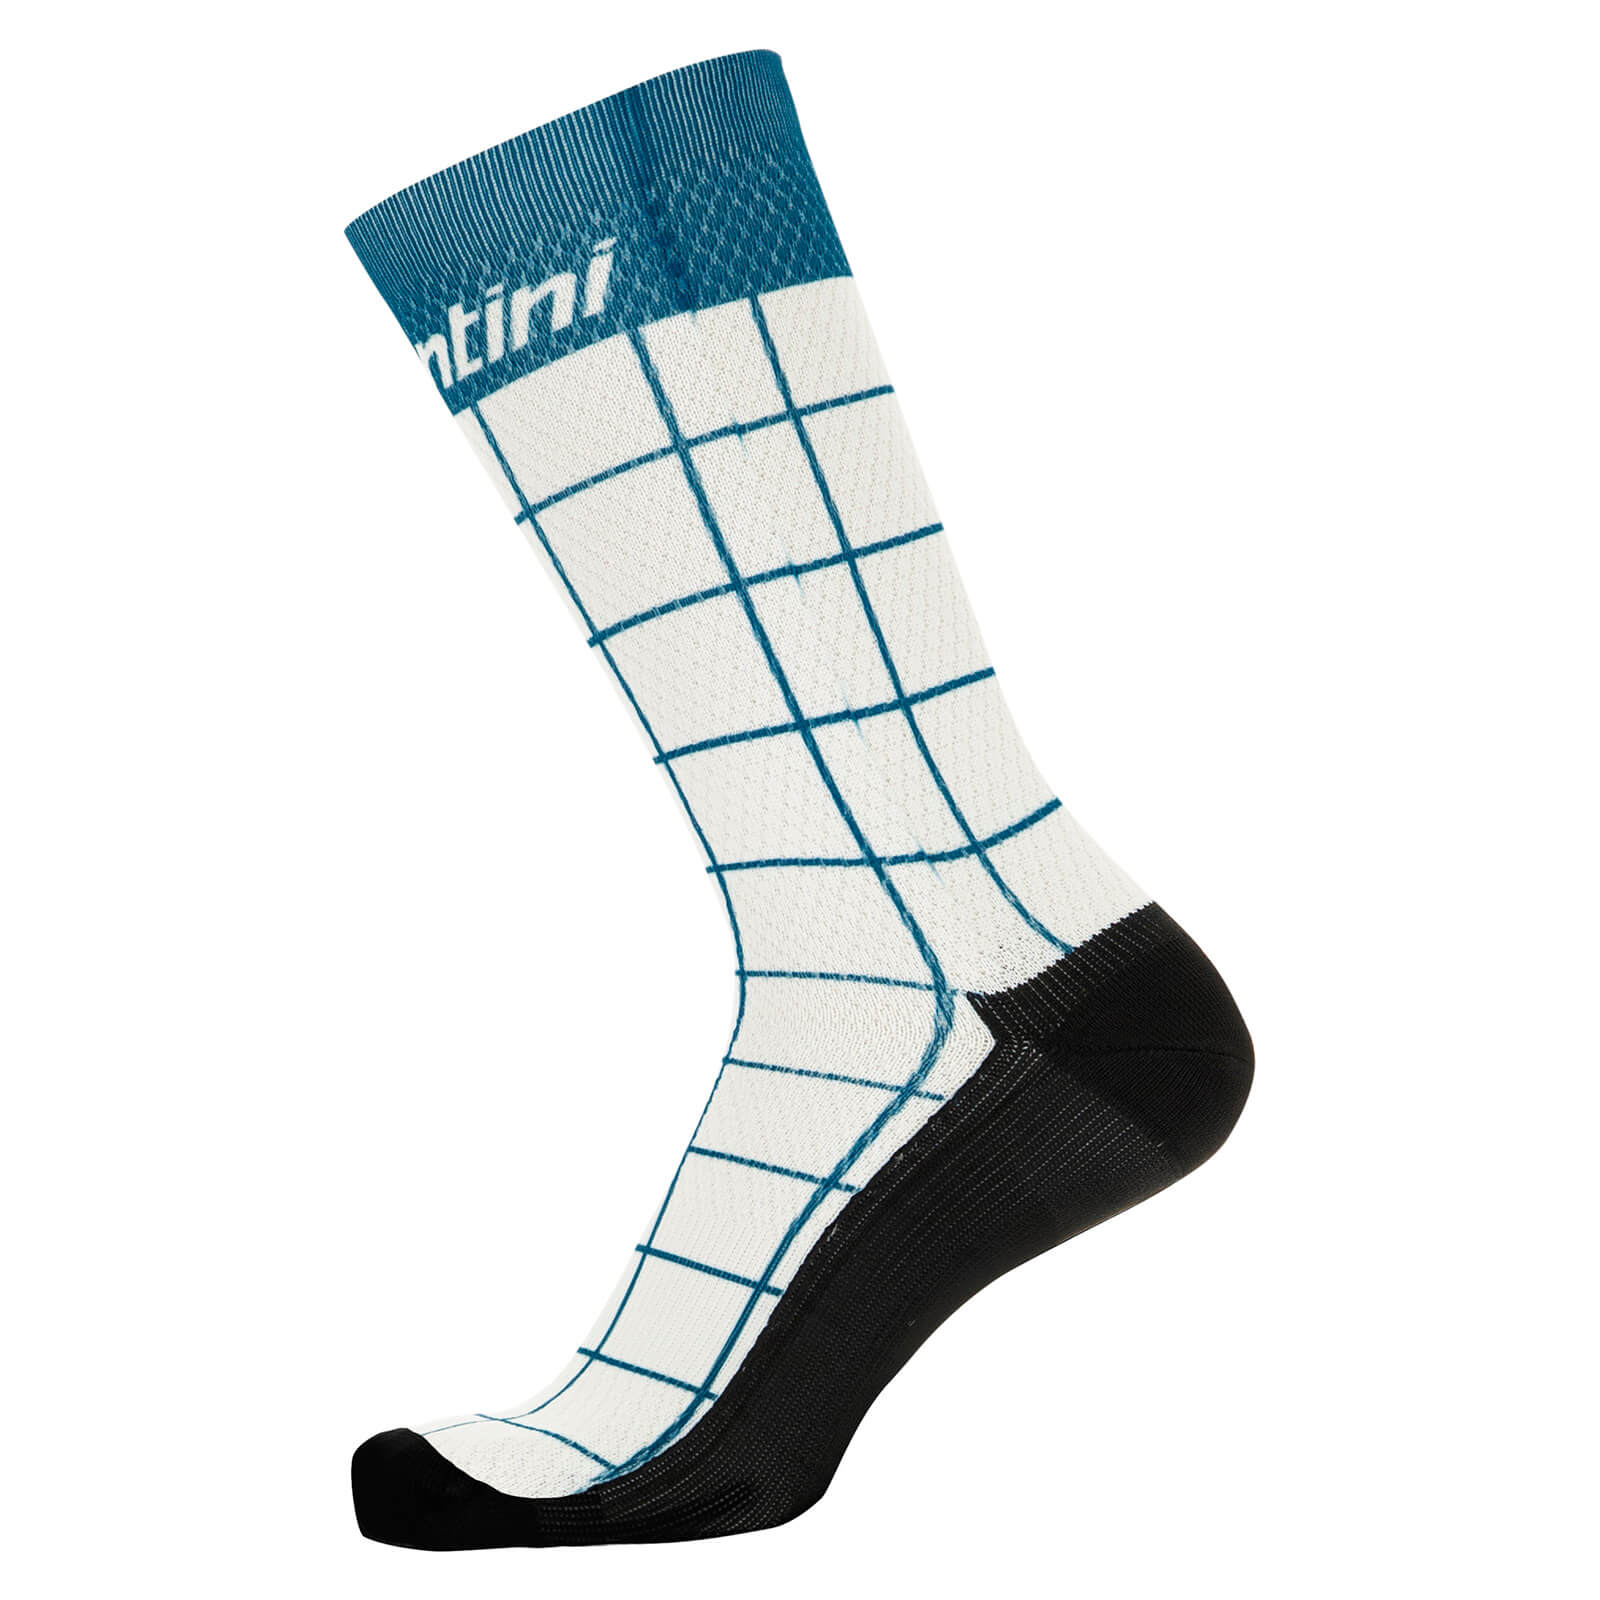 Santini Dinamo Medium Profile Printed Socks - XS - Silver Bullet